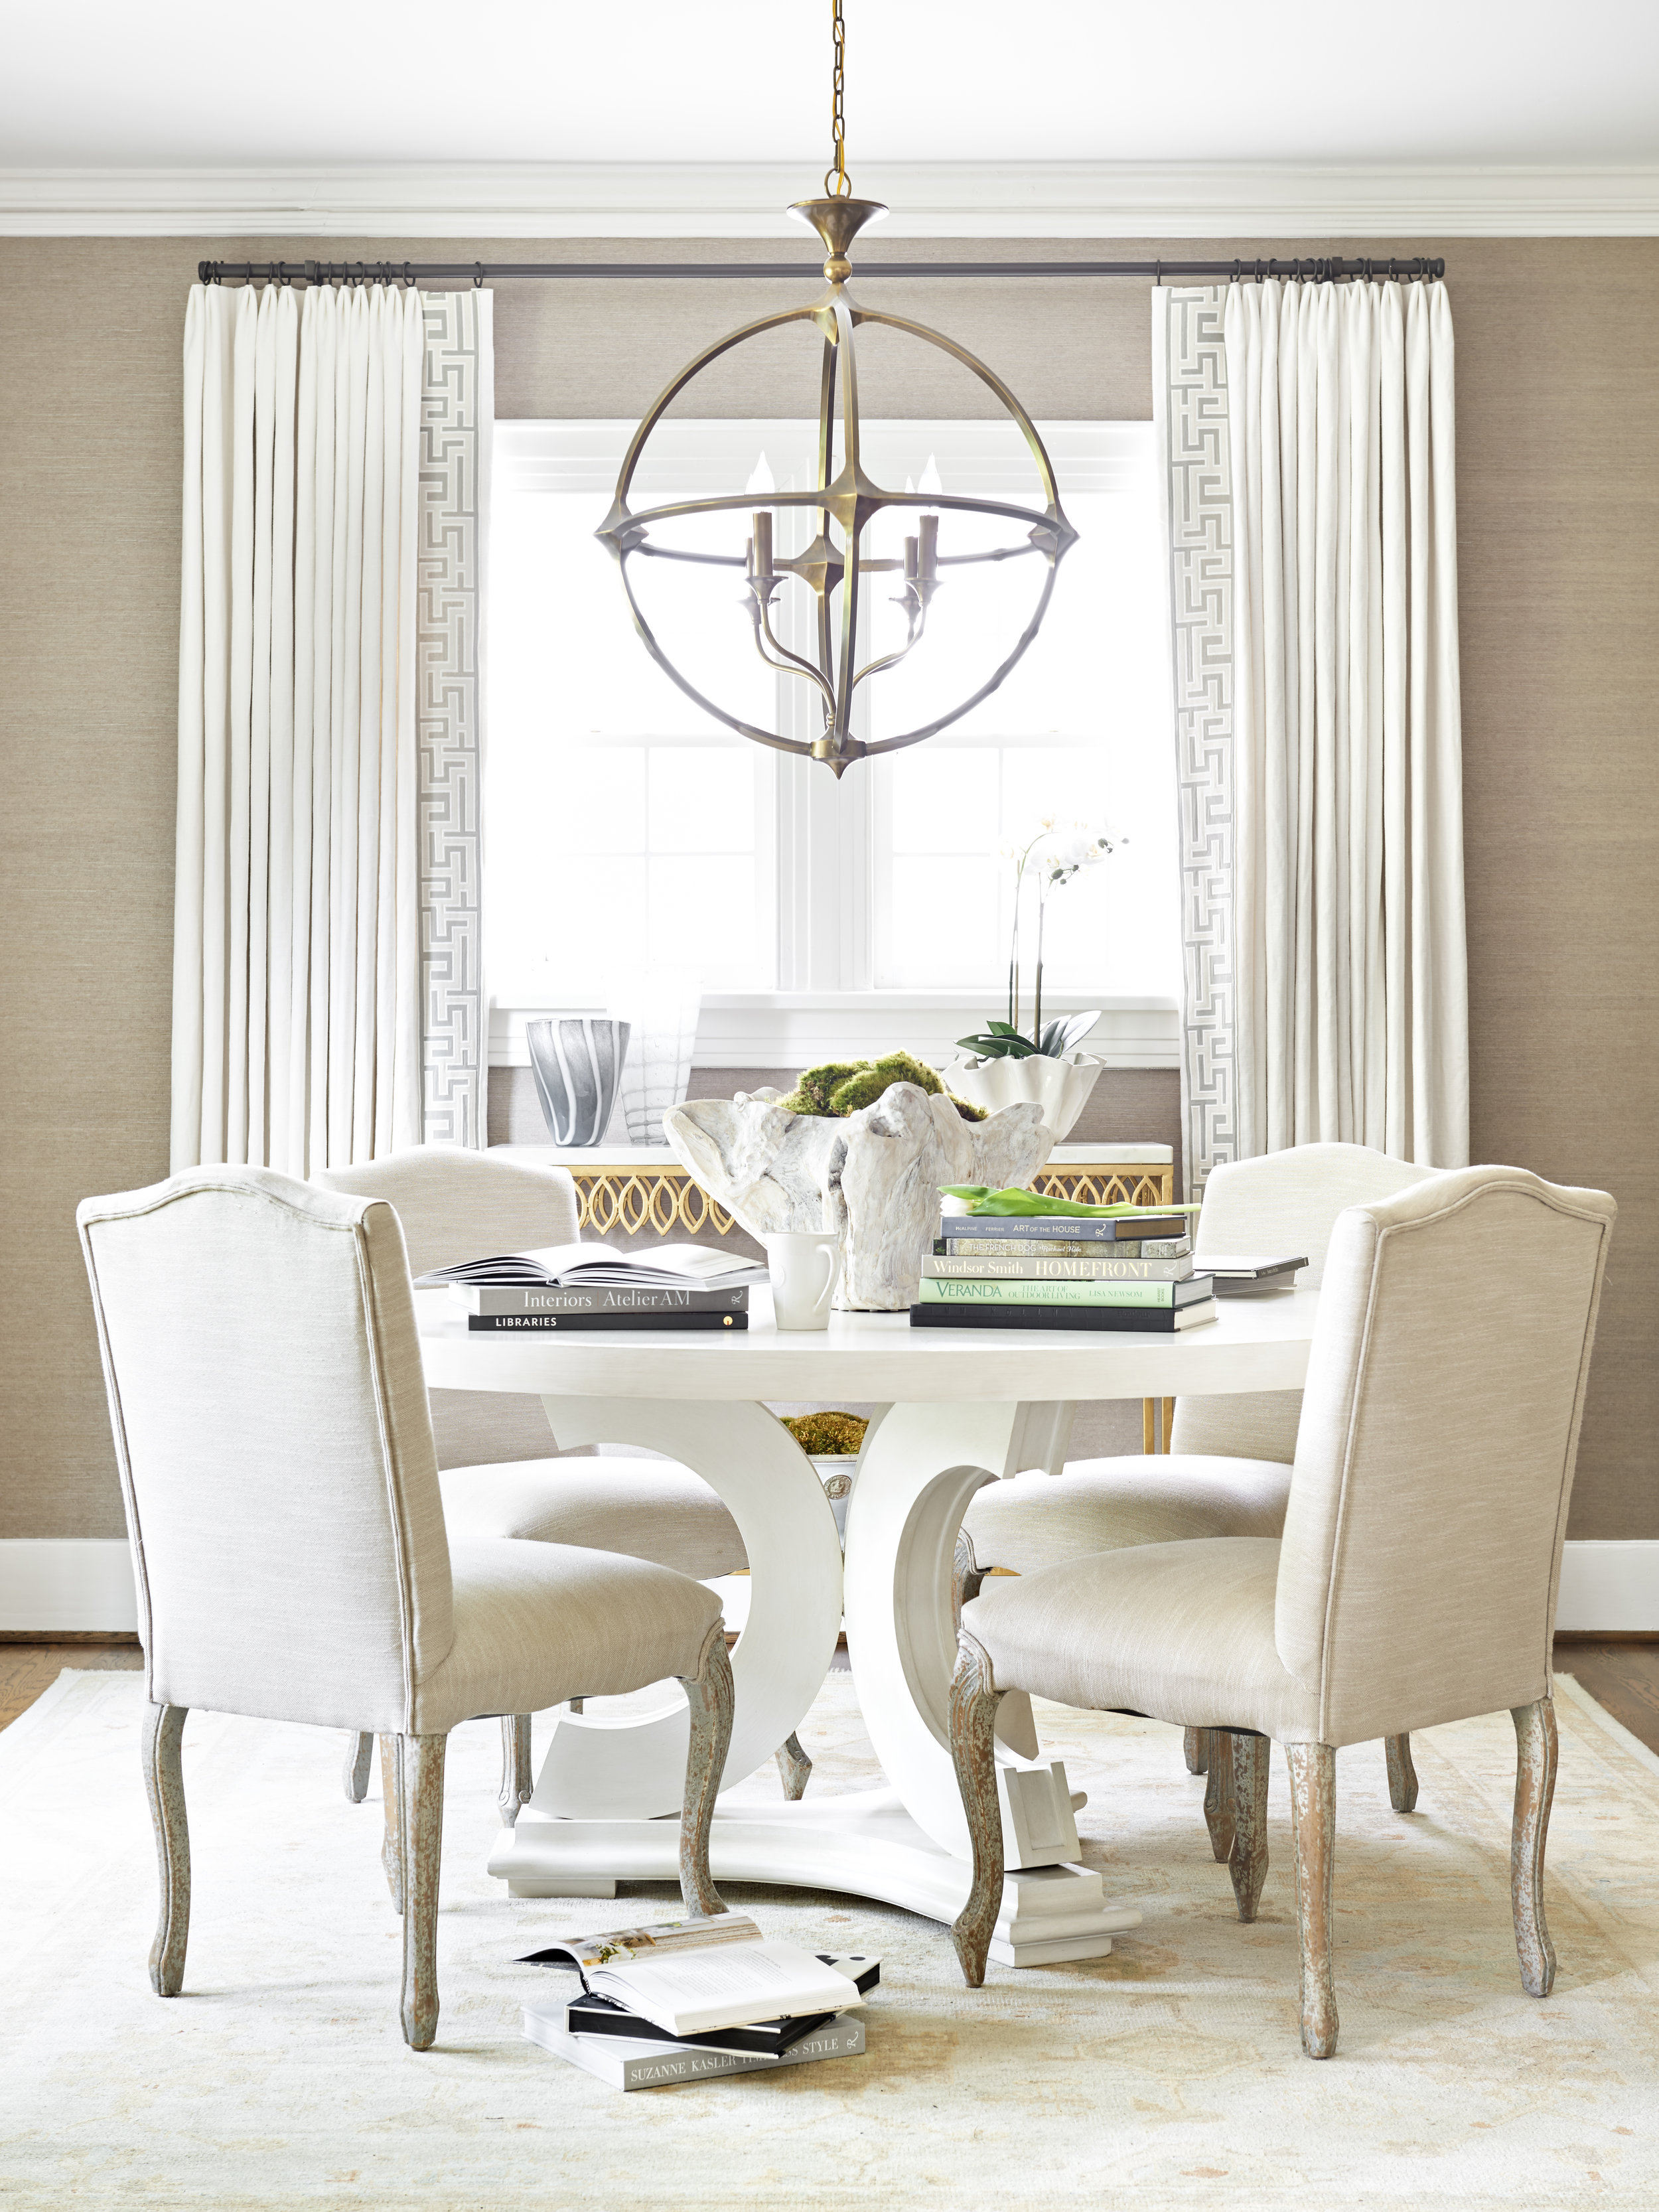 Transitional dining room design by Charleston based interior designer Lindsey Davis